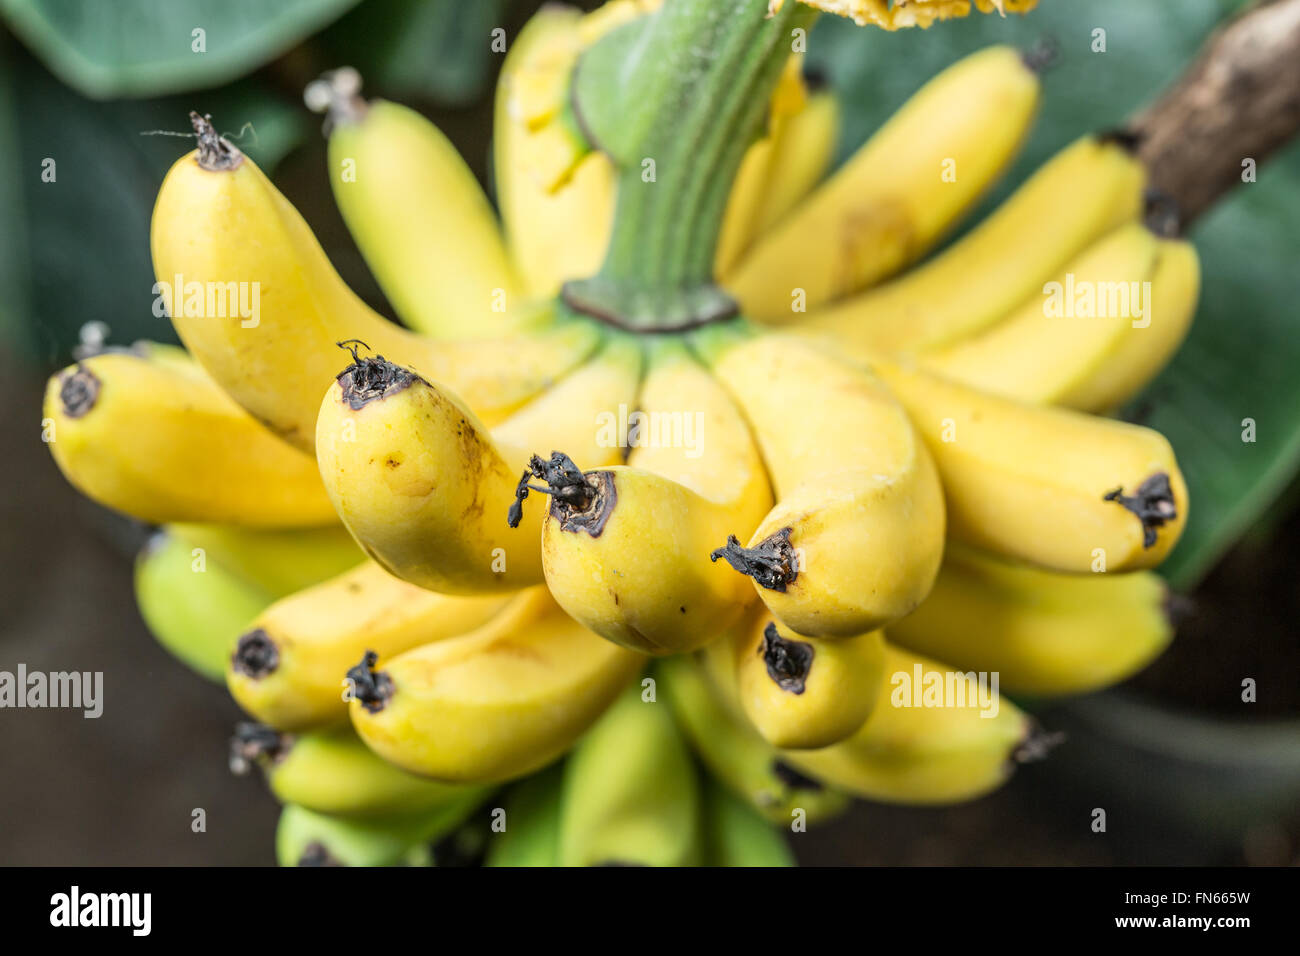 Bunch of banana fruits on the tree. Stock Photo